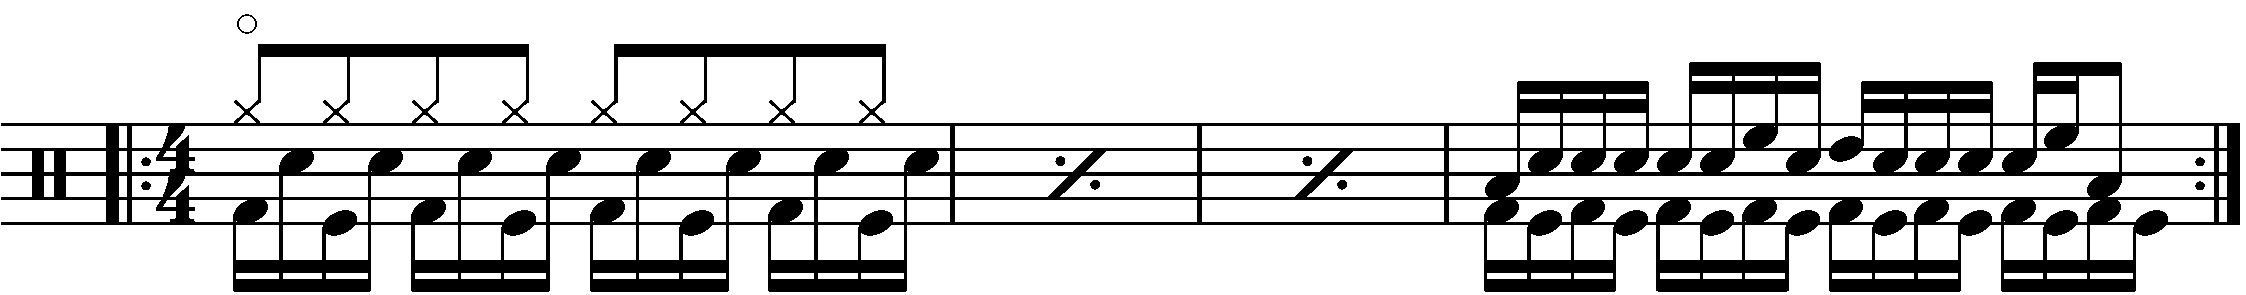 A four bar phrase built around sub divided eighth note blast beats